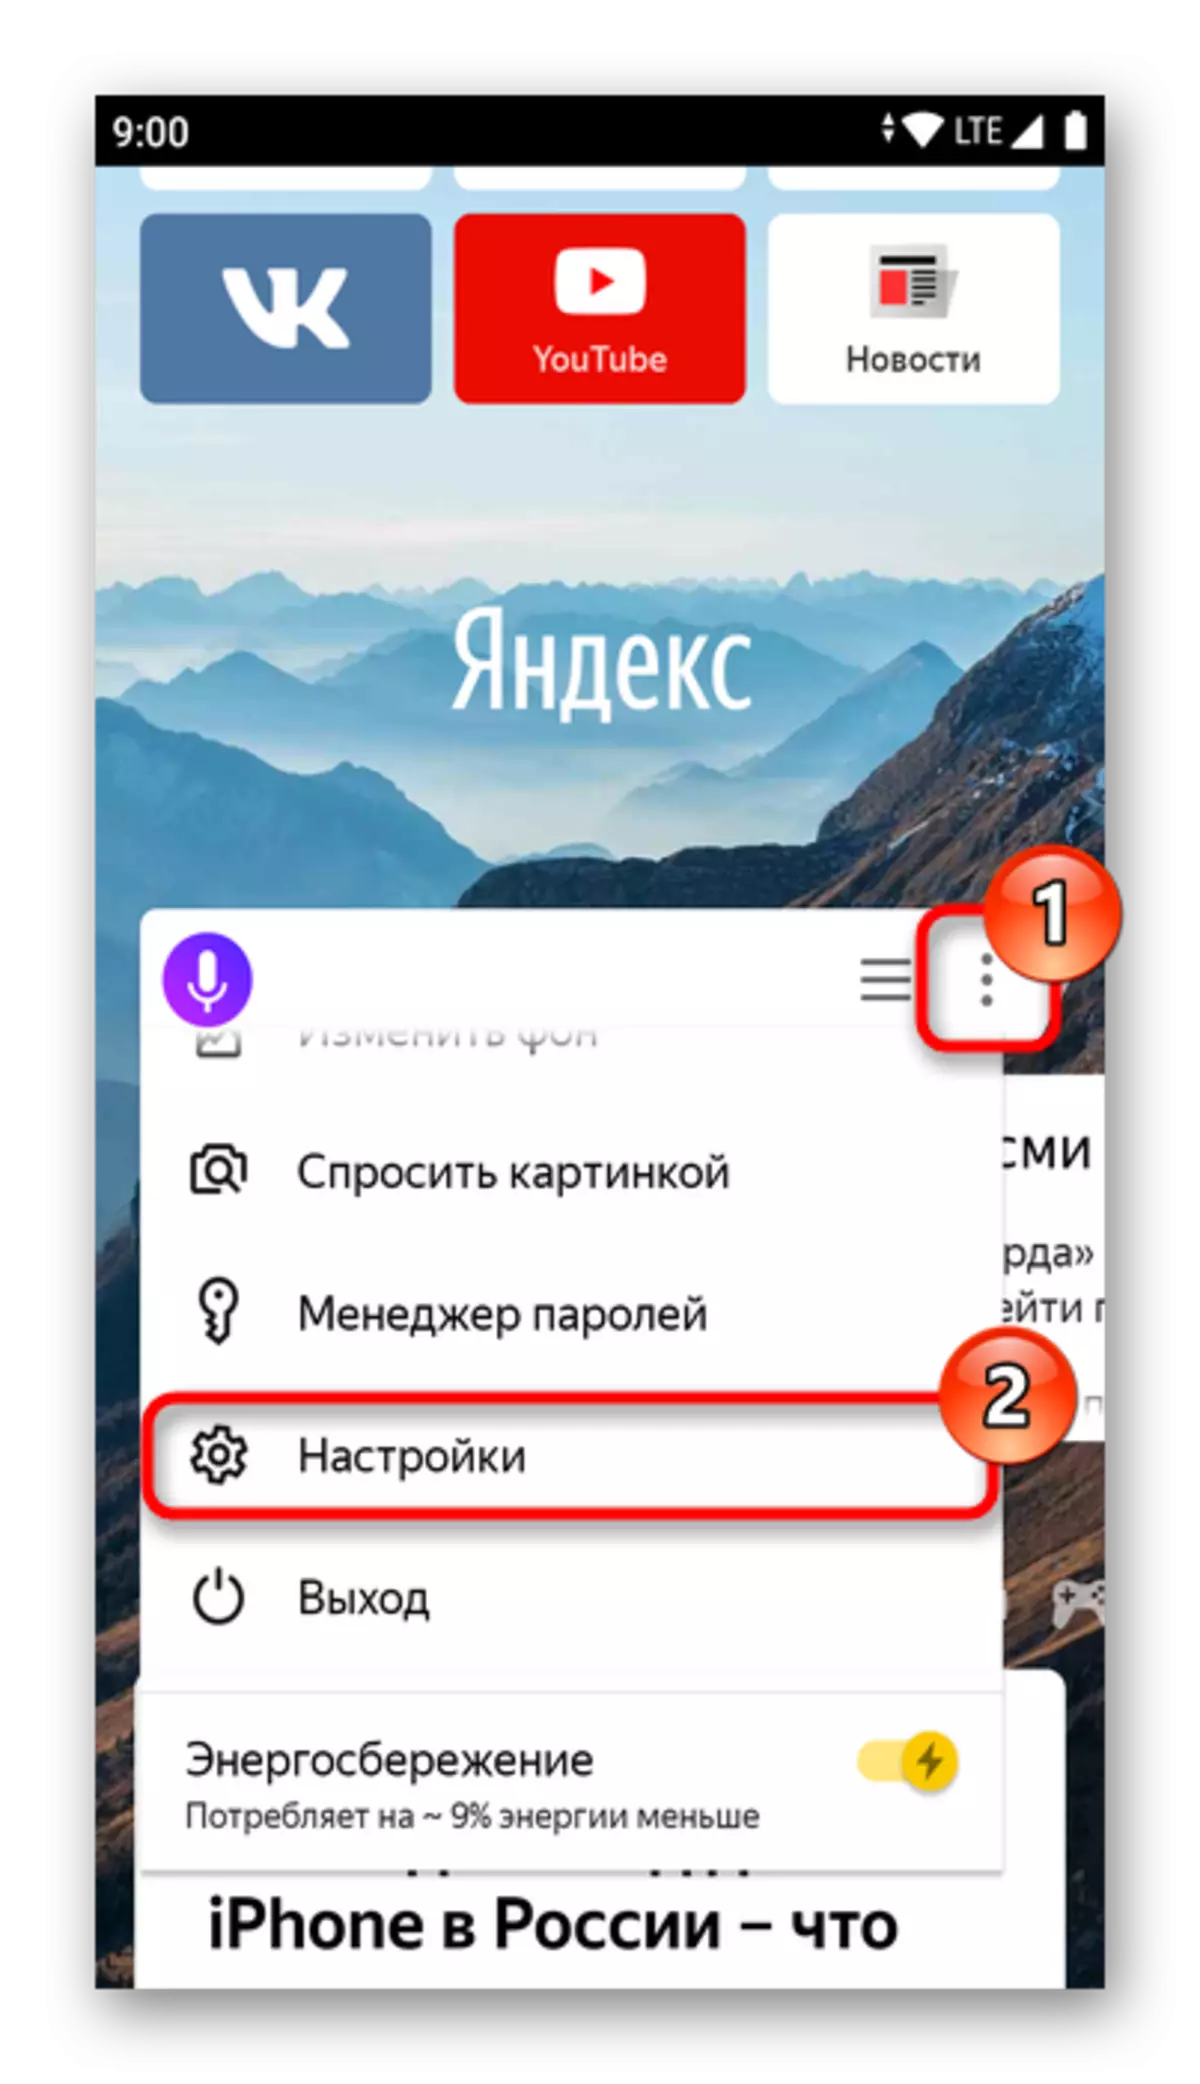 Mobile Yandex.Bauser Parametrlər menyusuna daxil olun